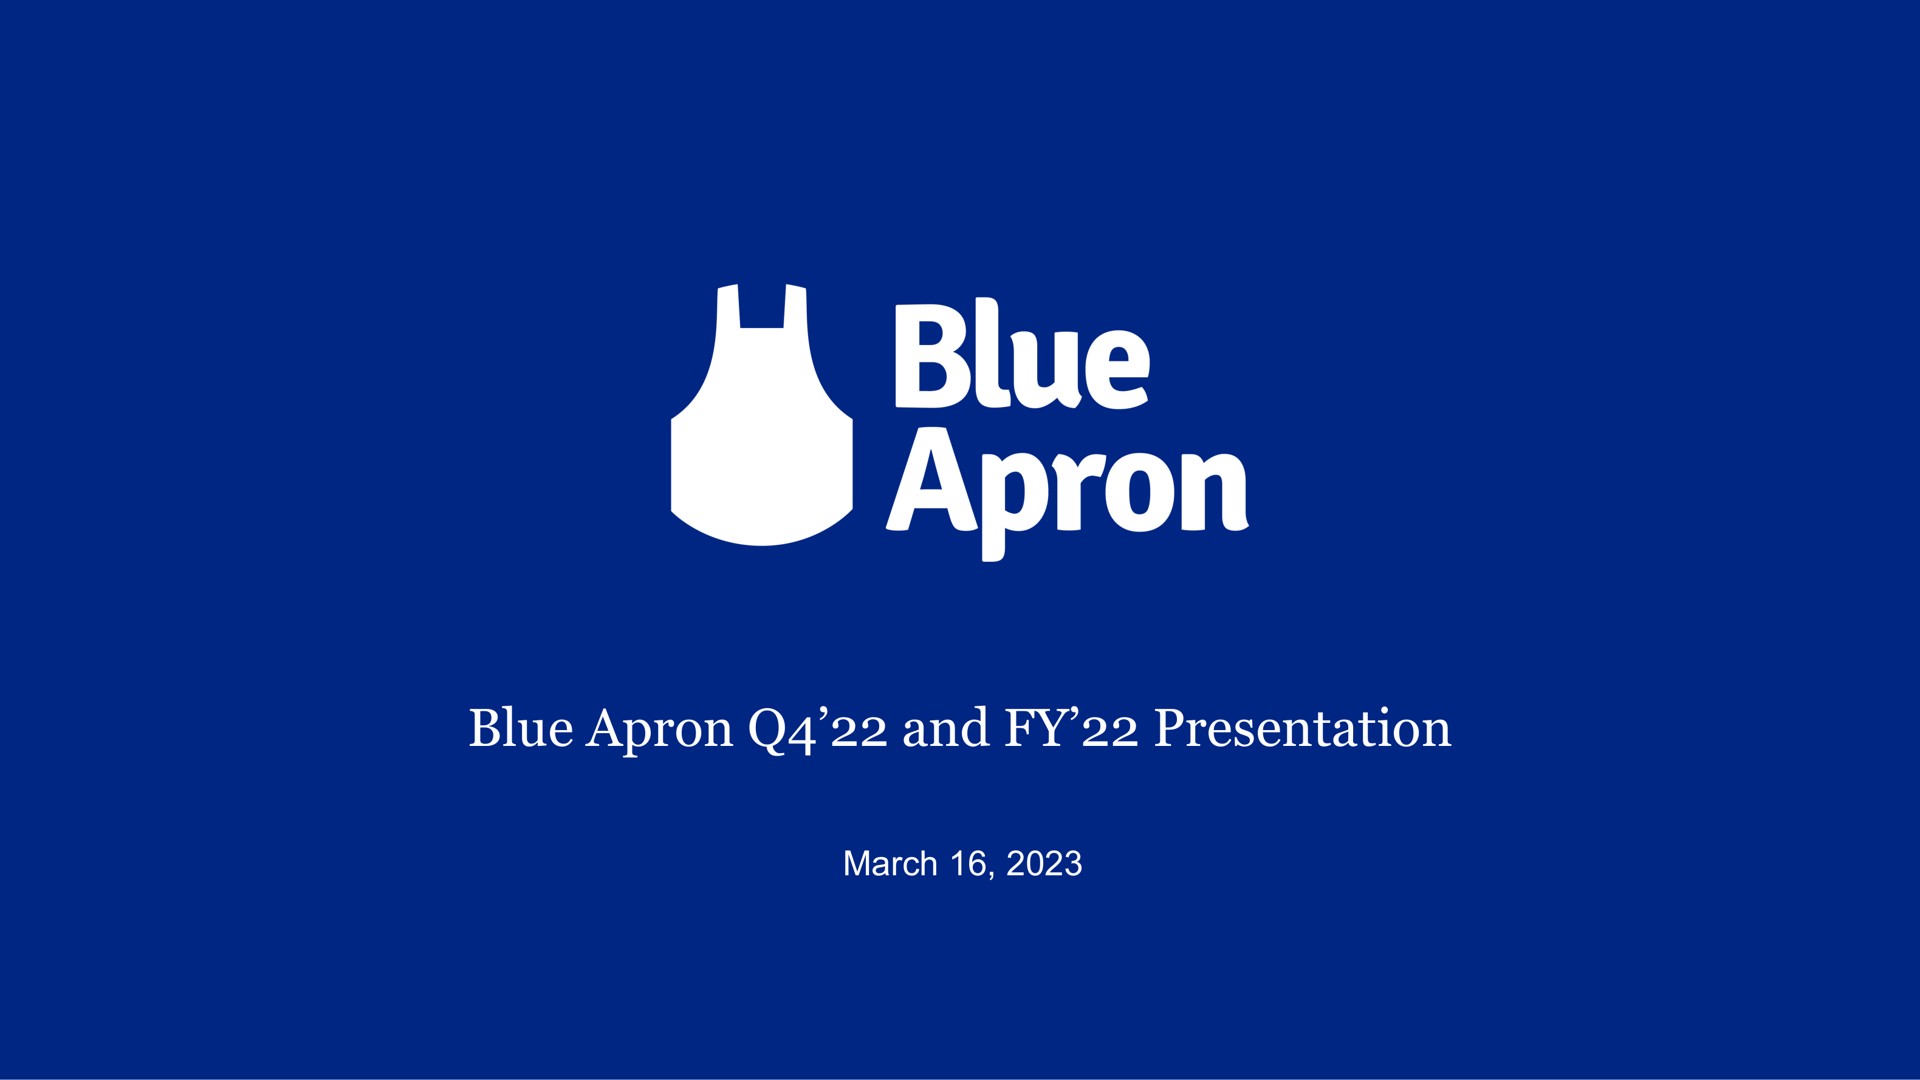 blue apron and presentation | Blue Apron